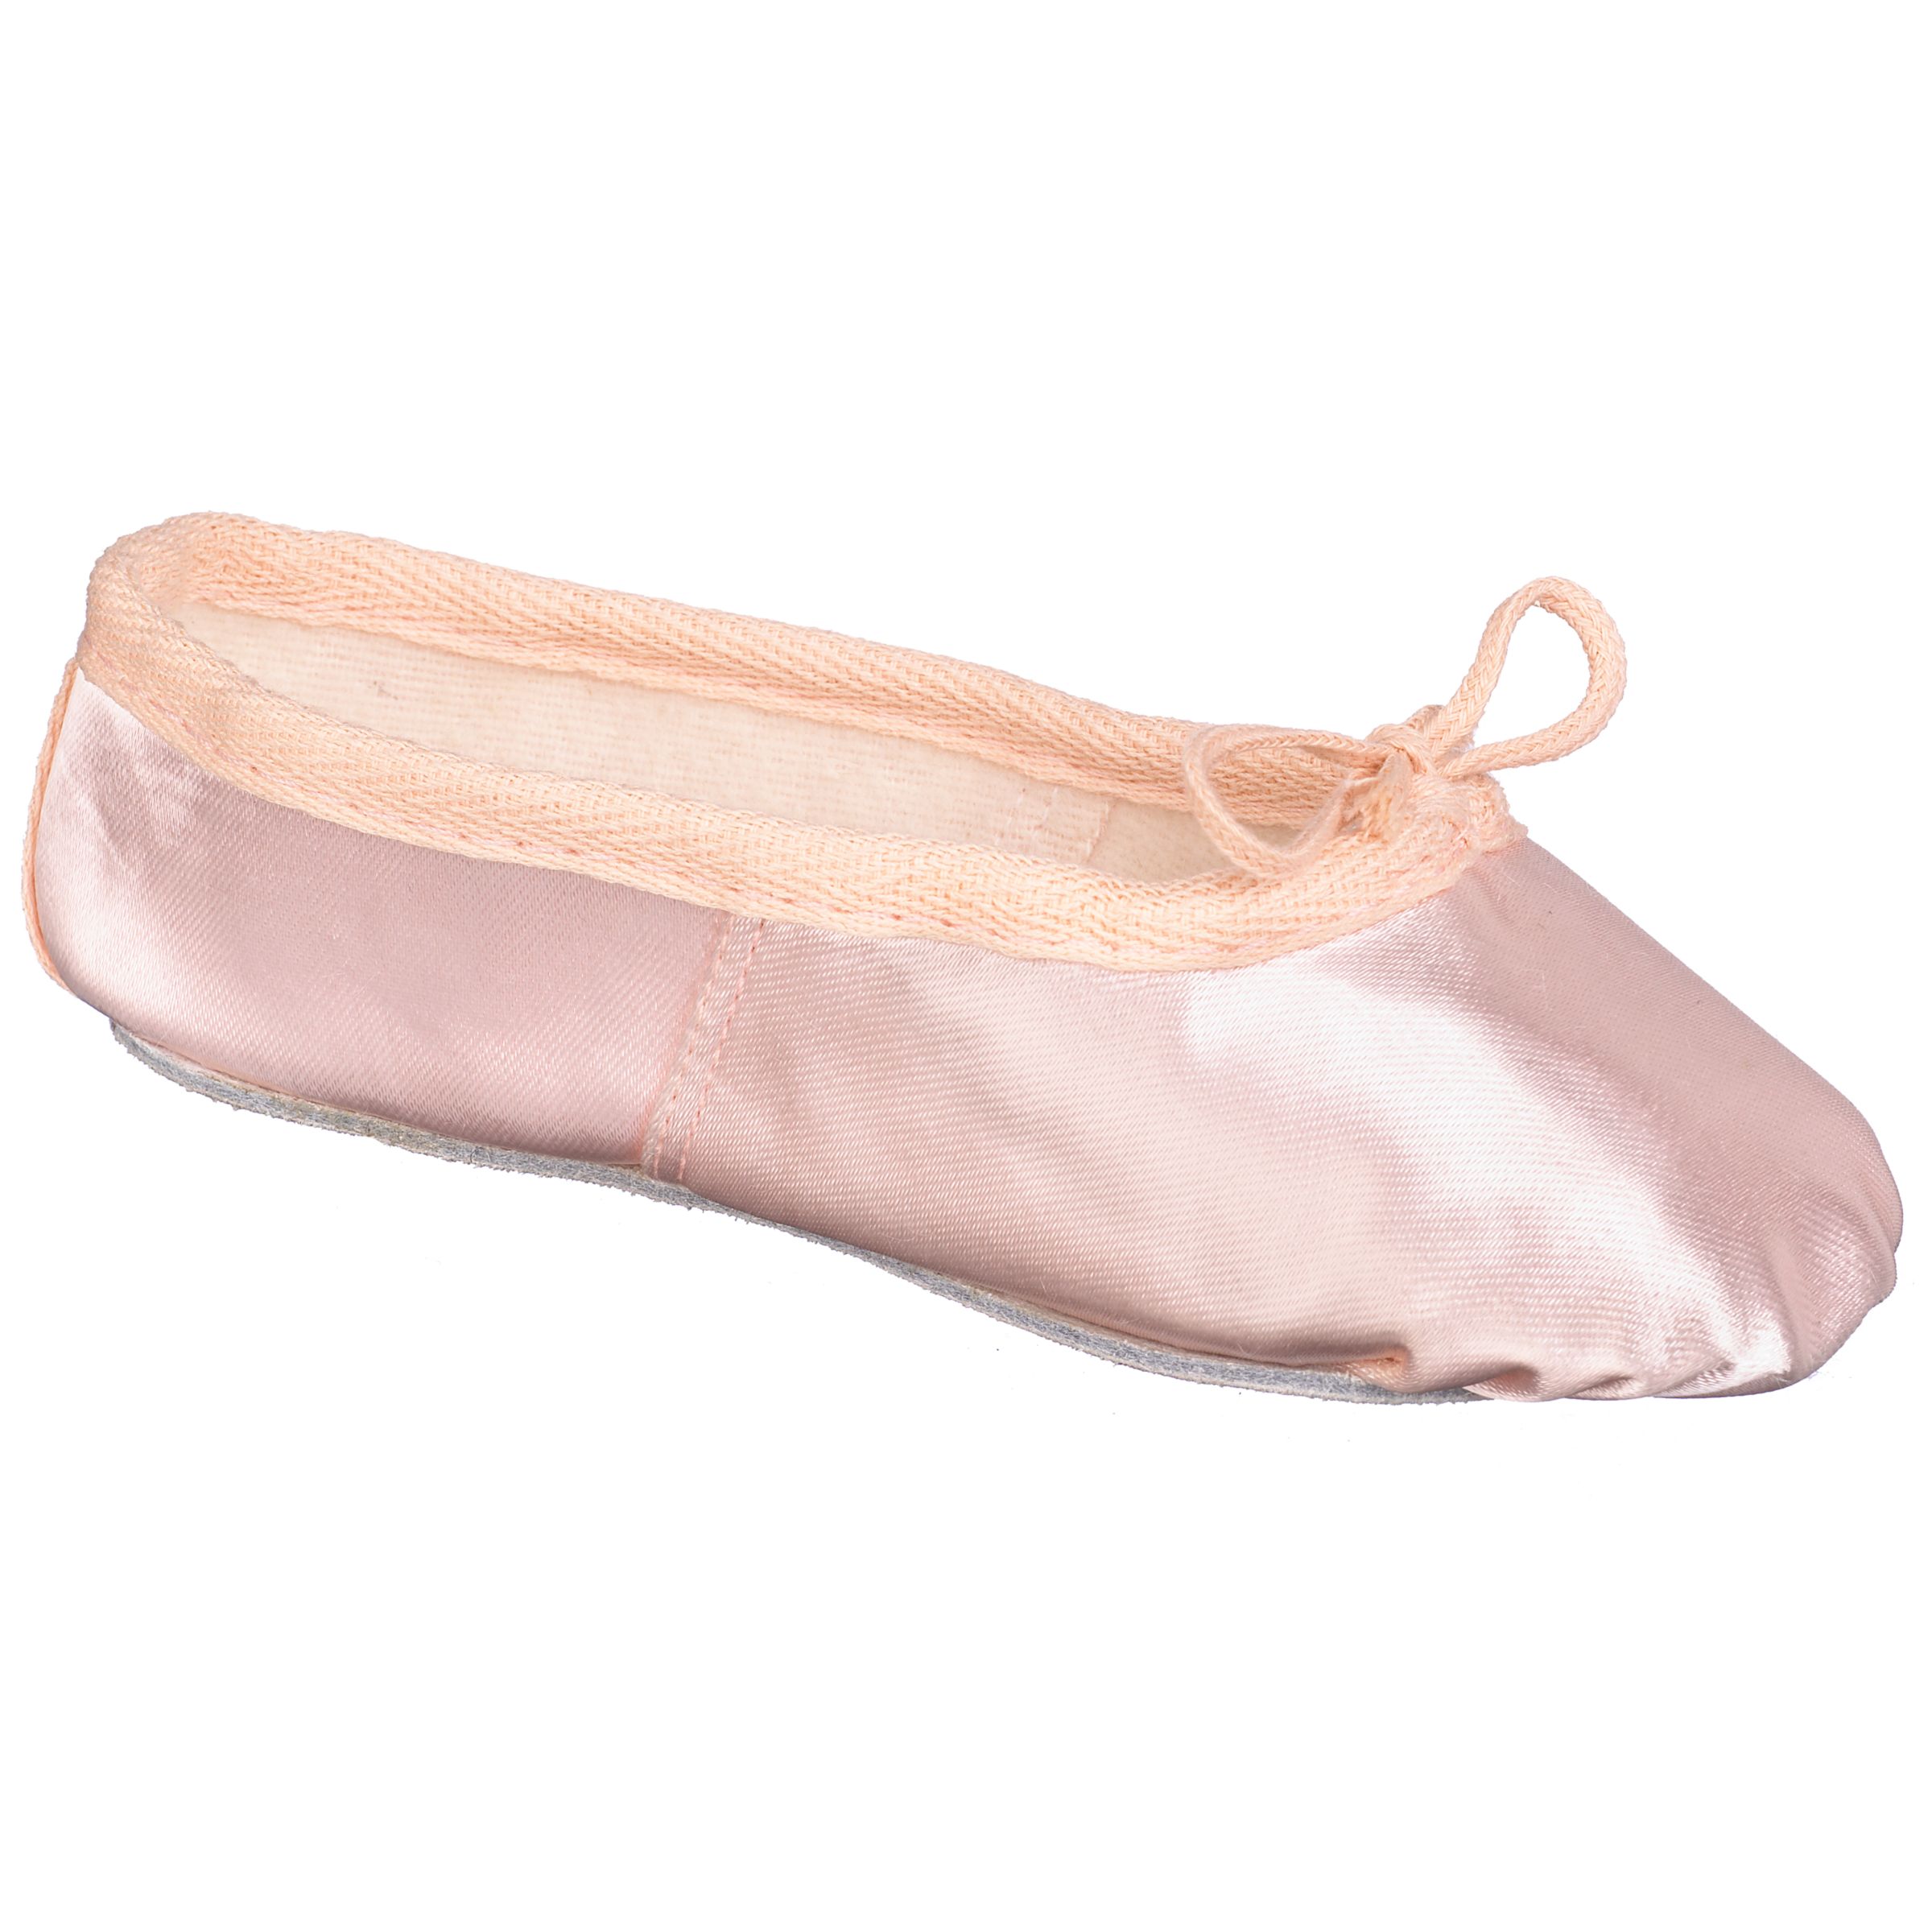 Satin Ballet Shoes, Pink 44086